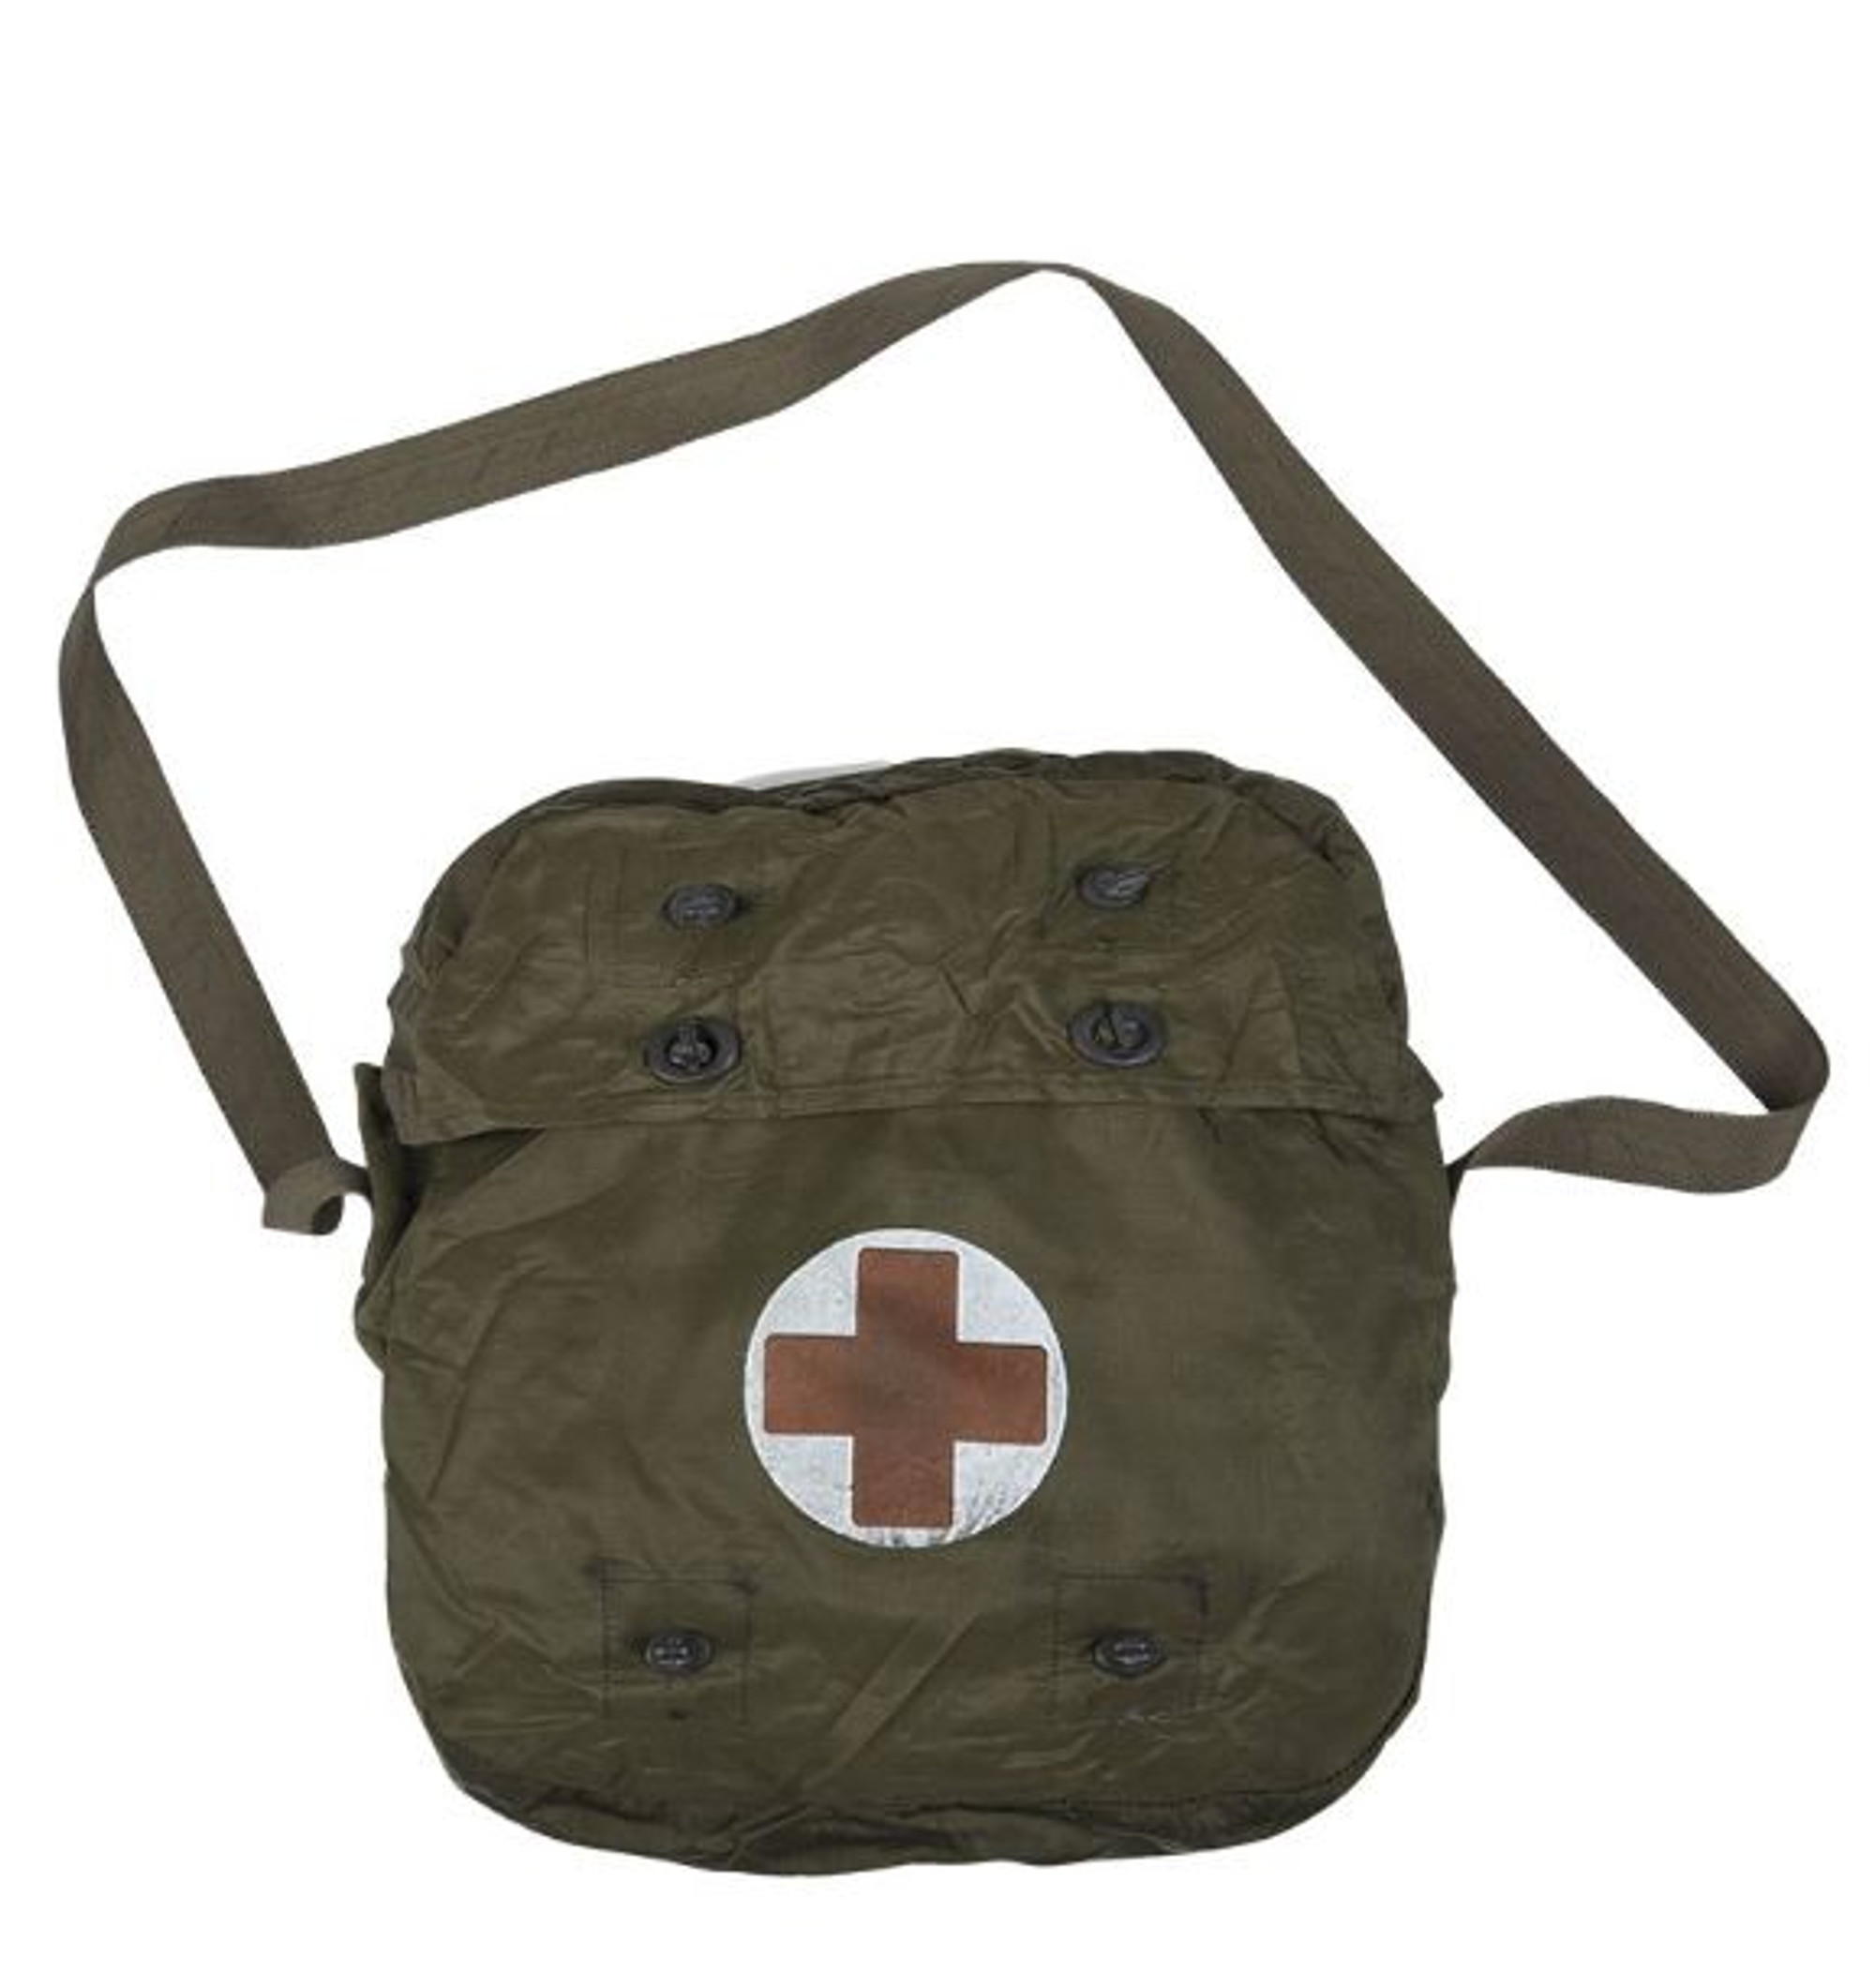 Dutch Armed Forces Olive Drab  Medic Bag w/Strap